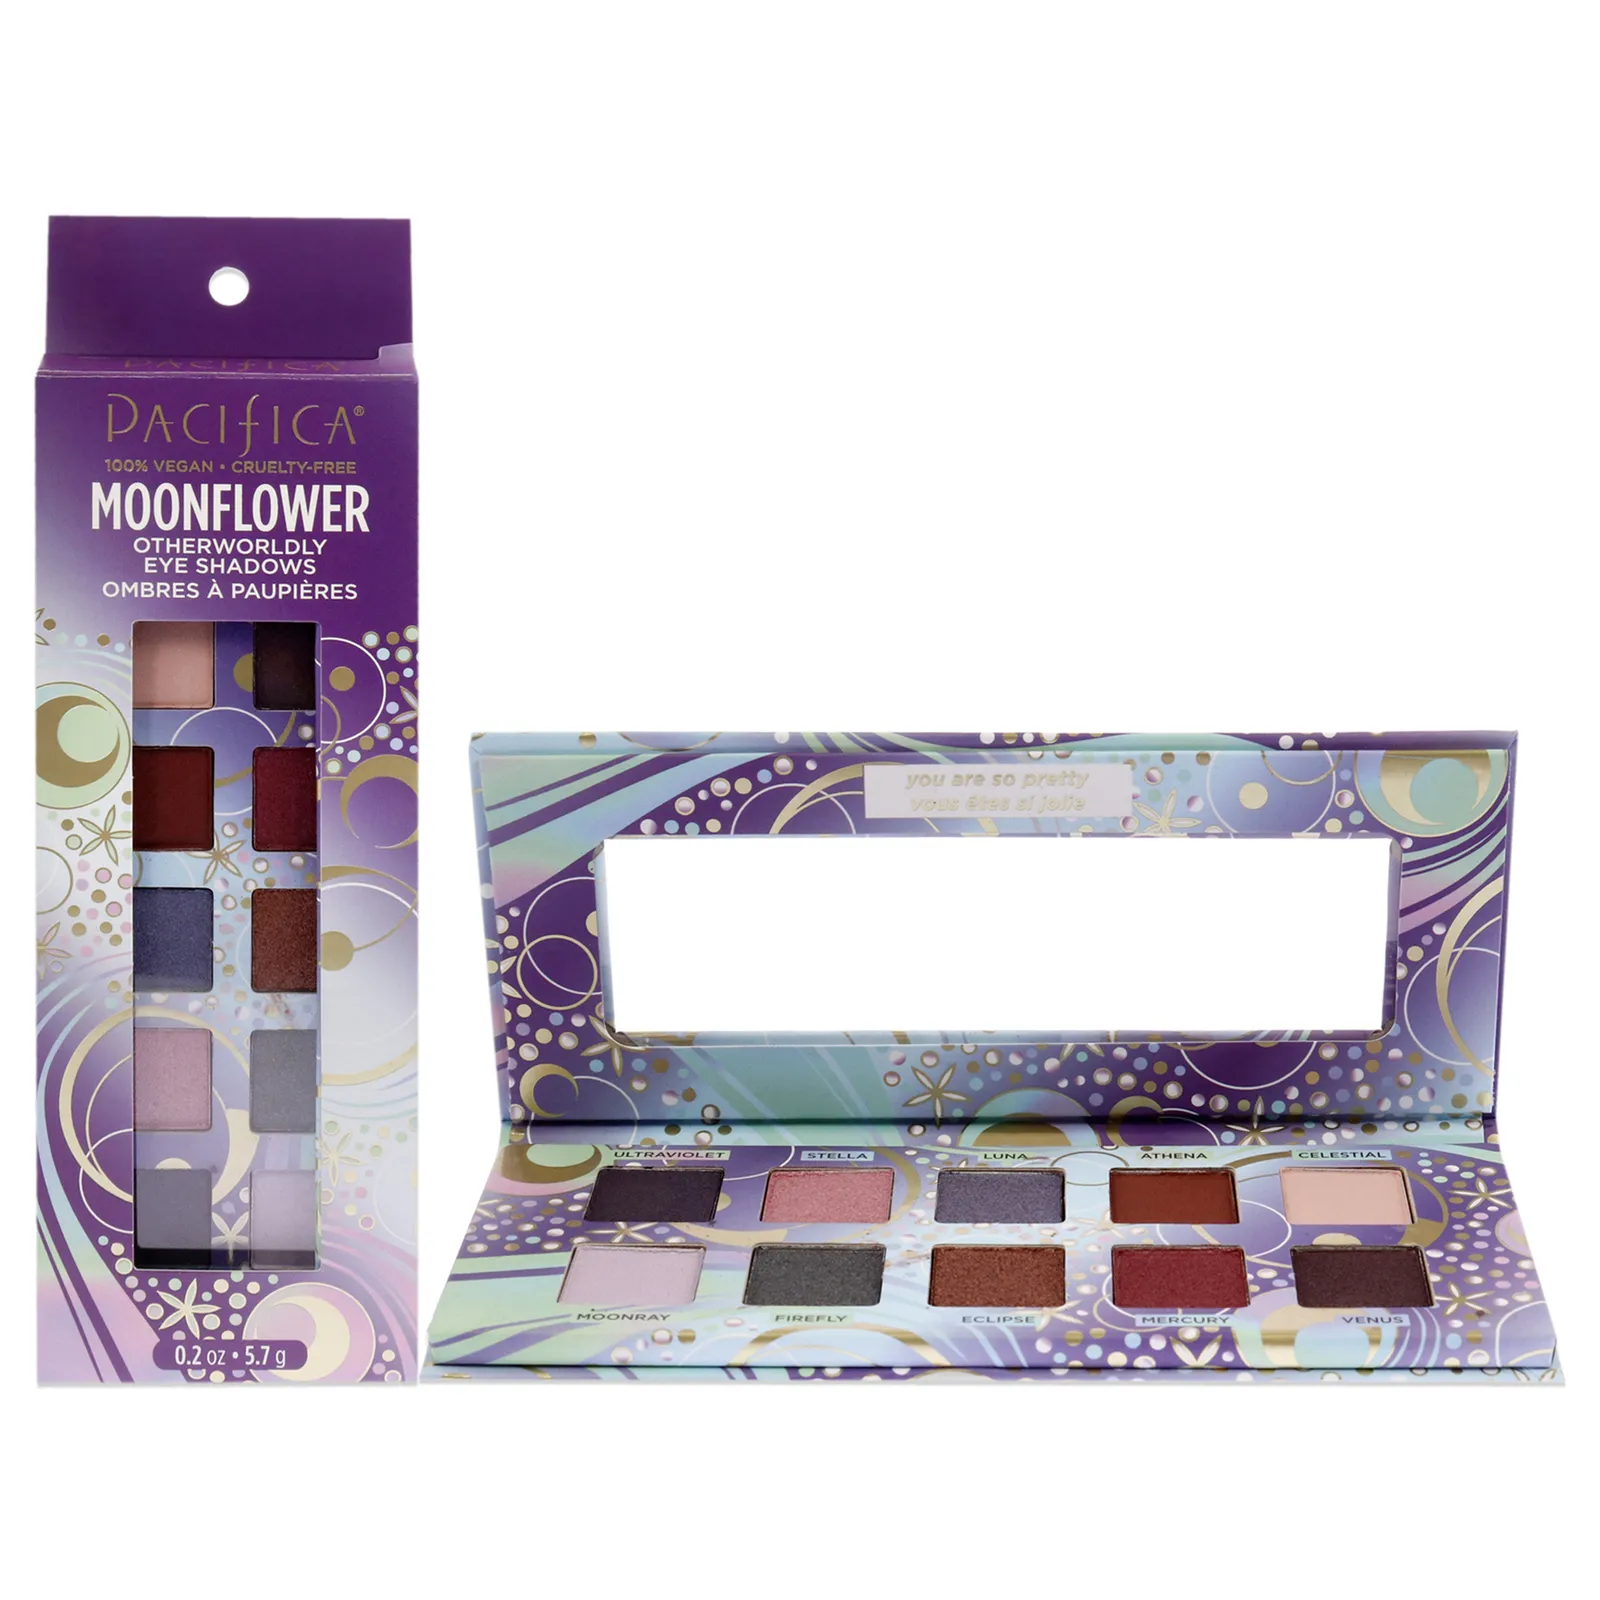 Moonflower Otherworldly Eyeshadows by Pacifica for Women - 0.2 oz Eye Sh... - $27.00